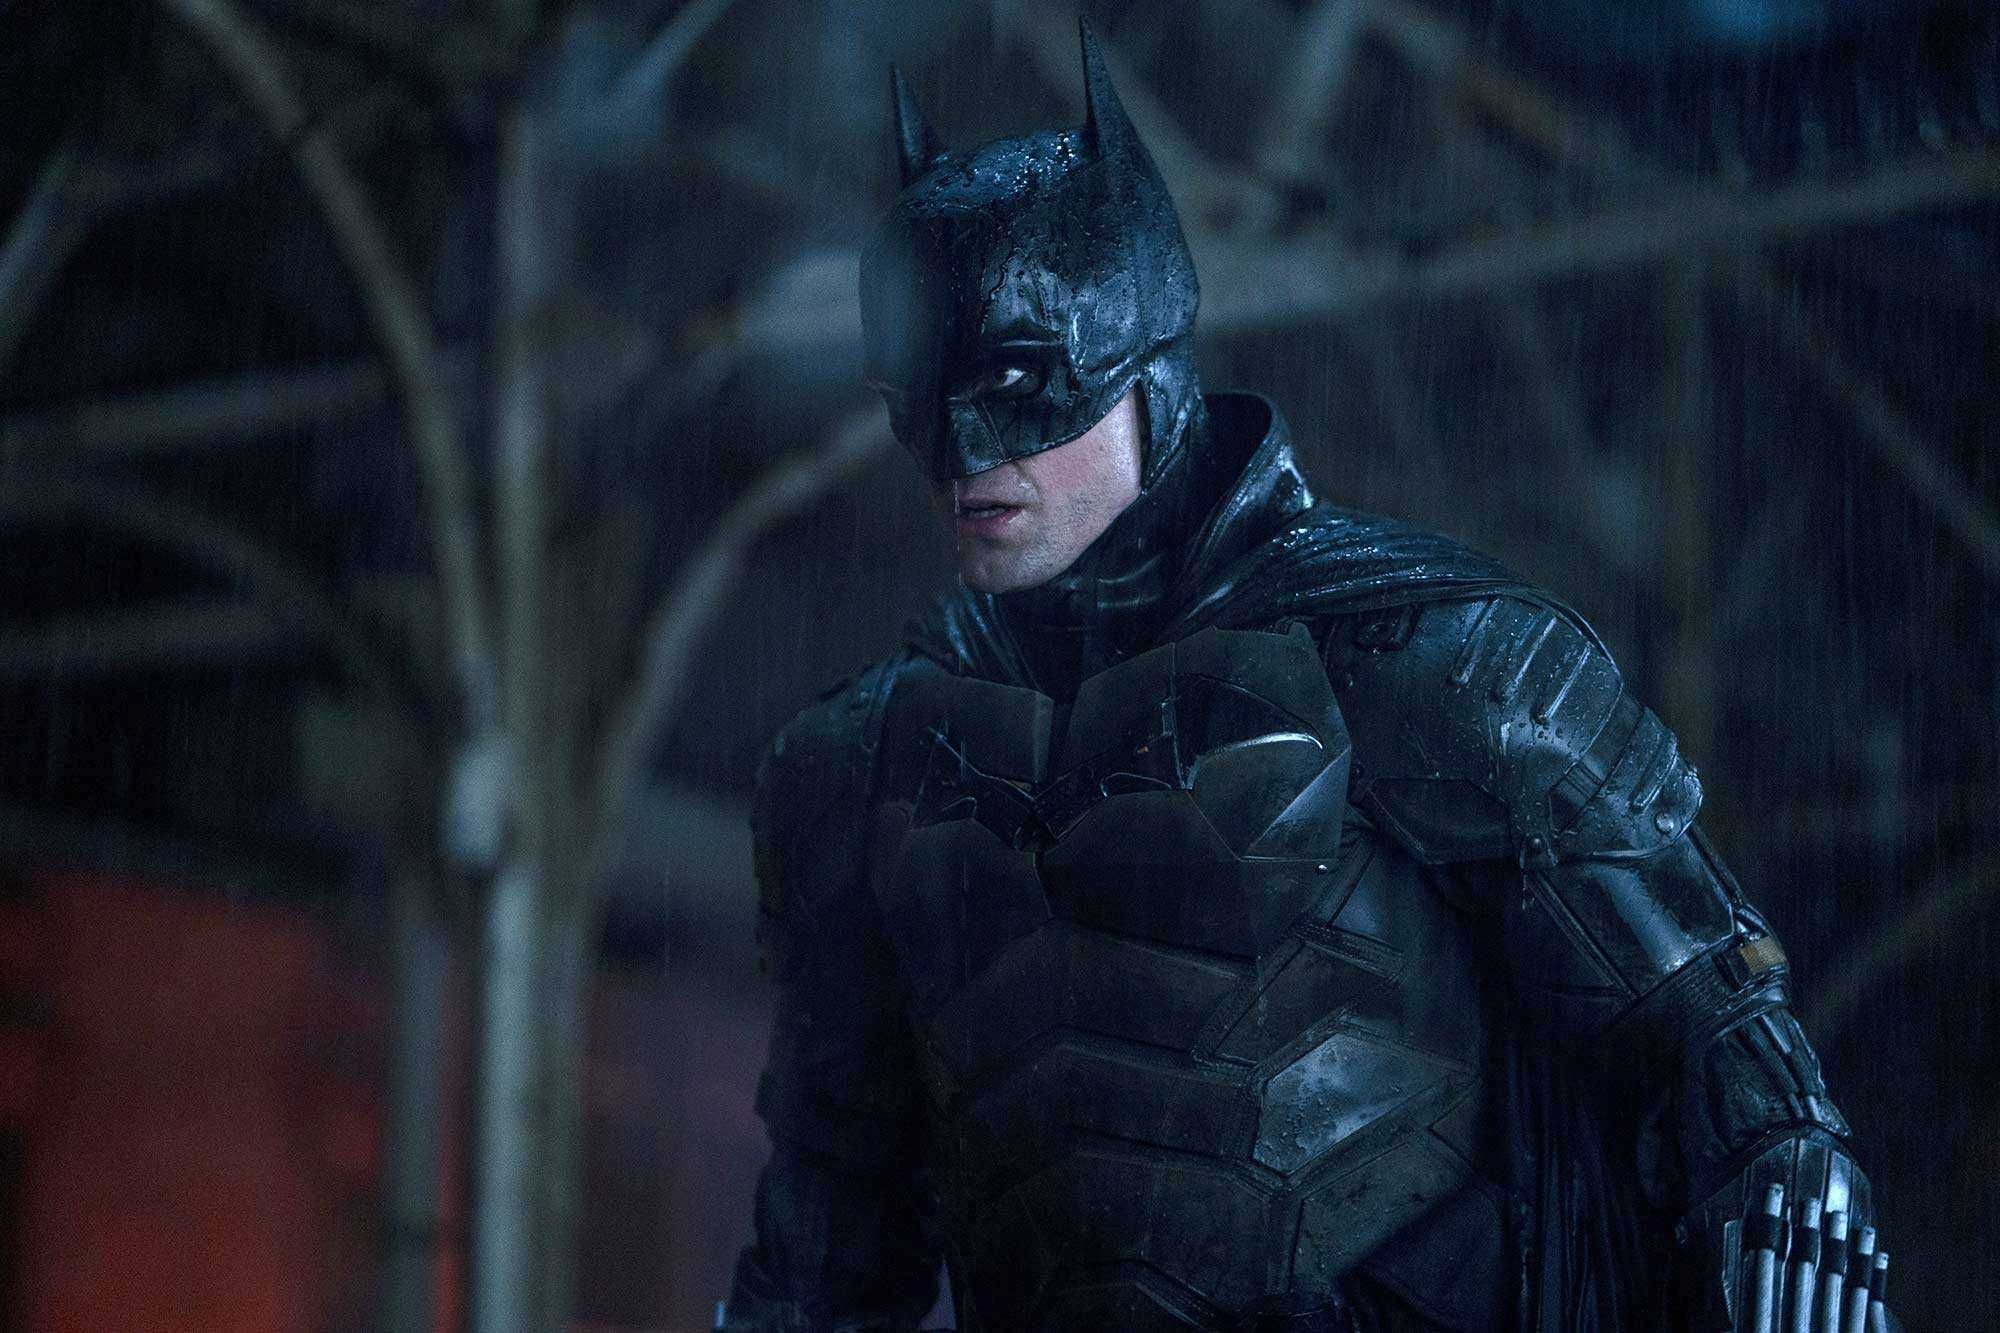 Robert Pattinson's grueling transformation for The Batman - a look back